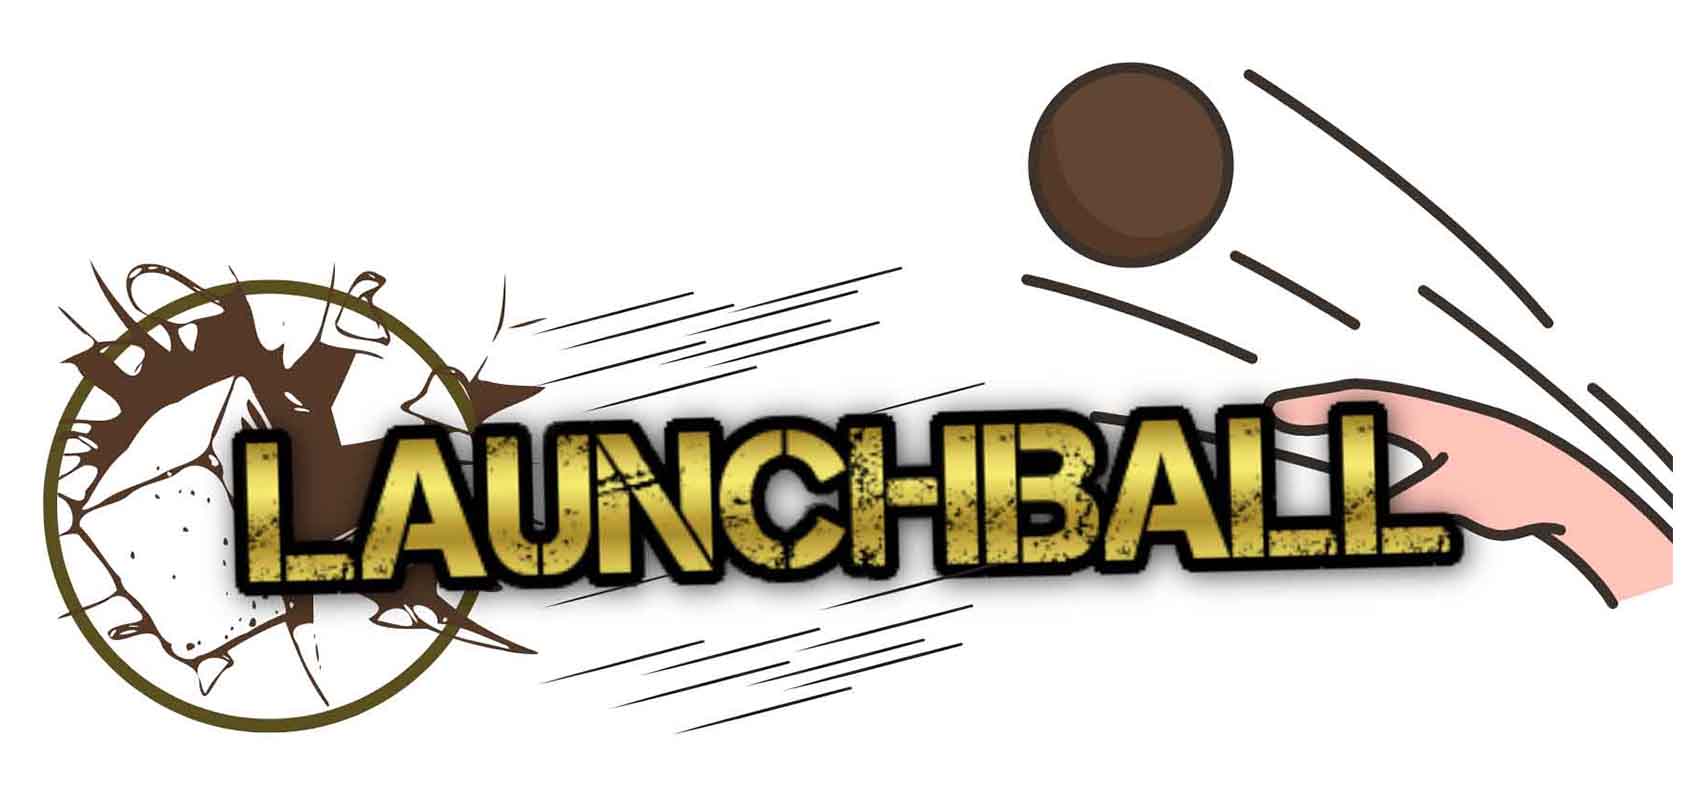 Launchball